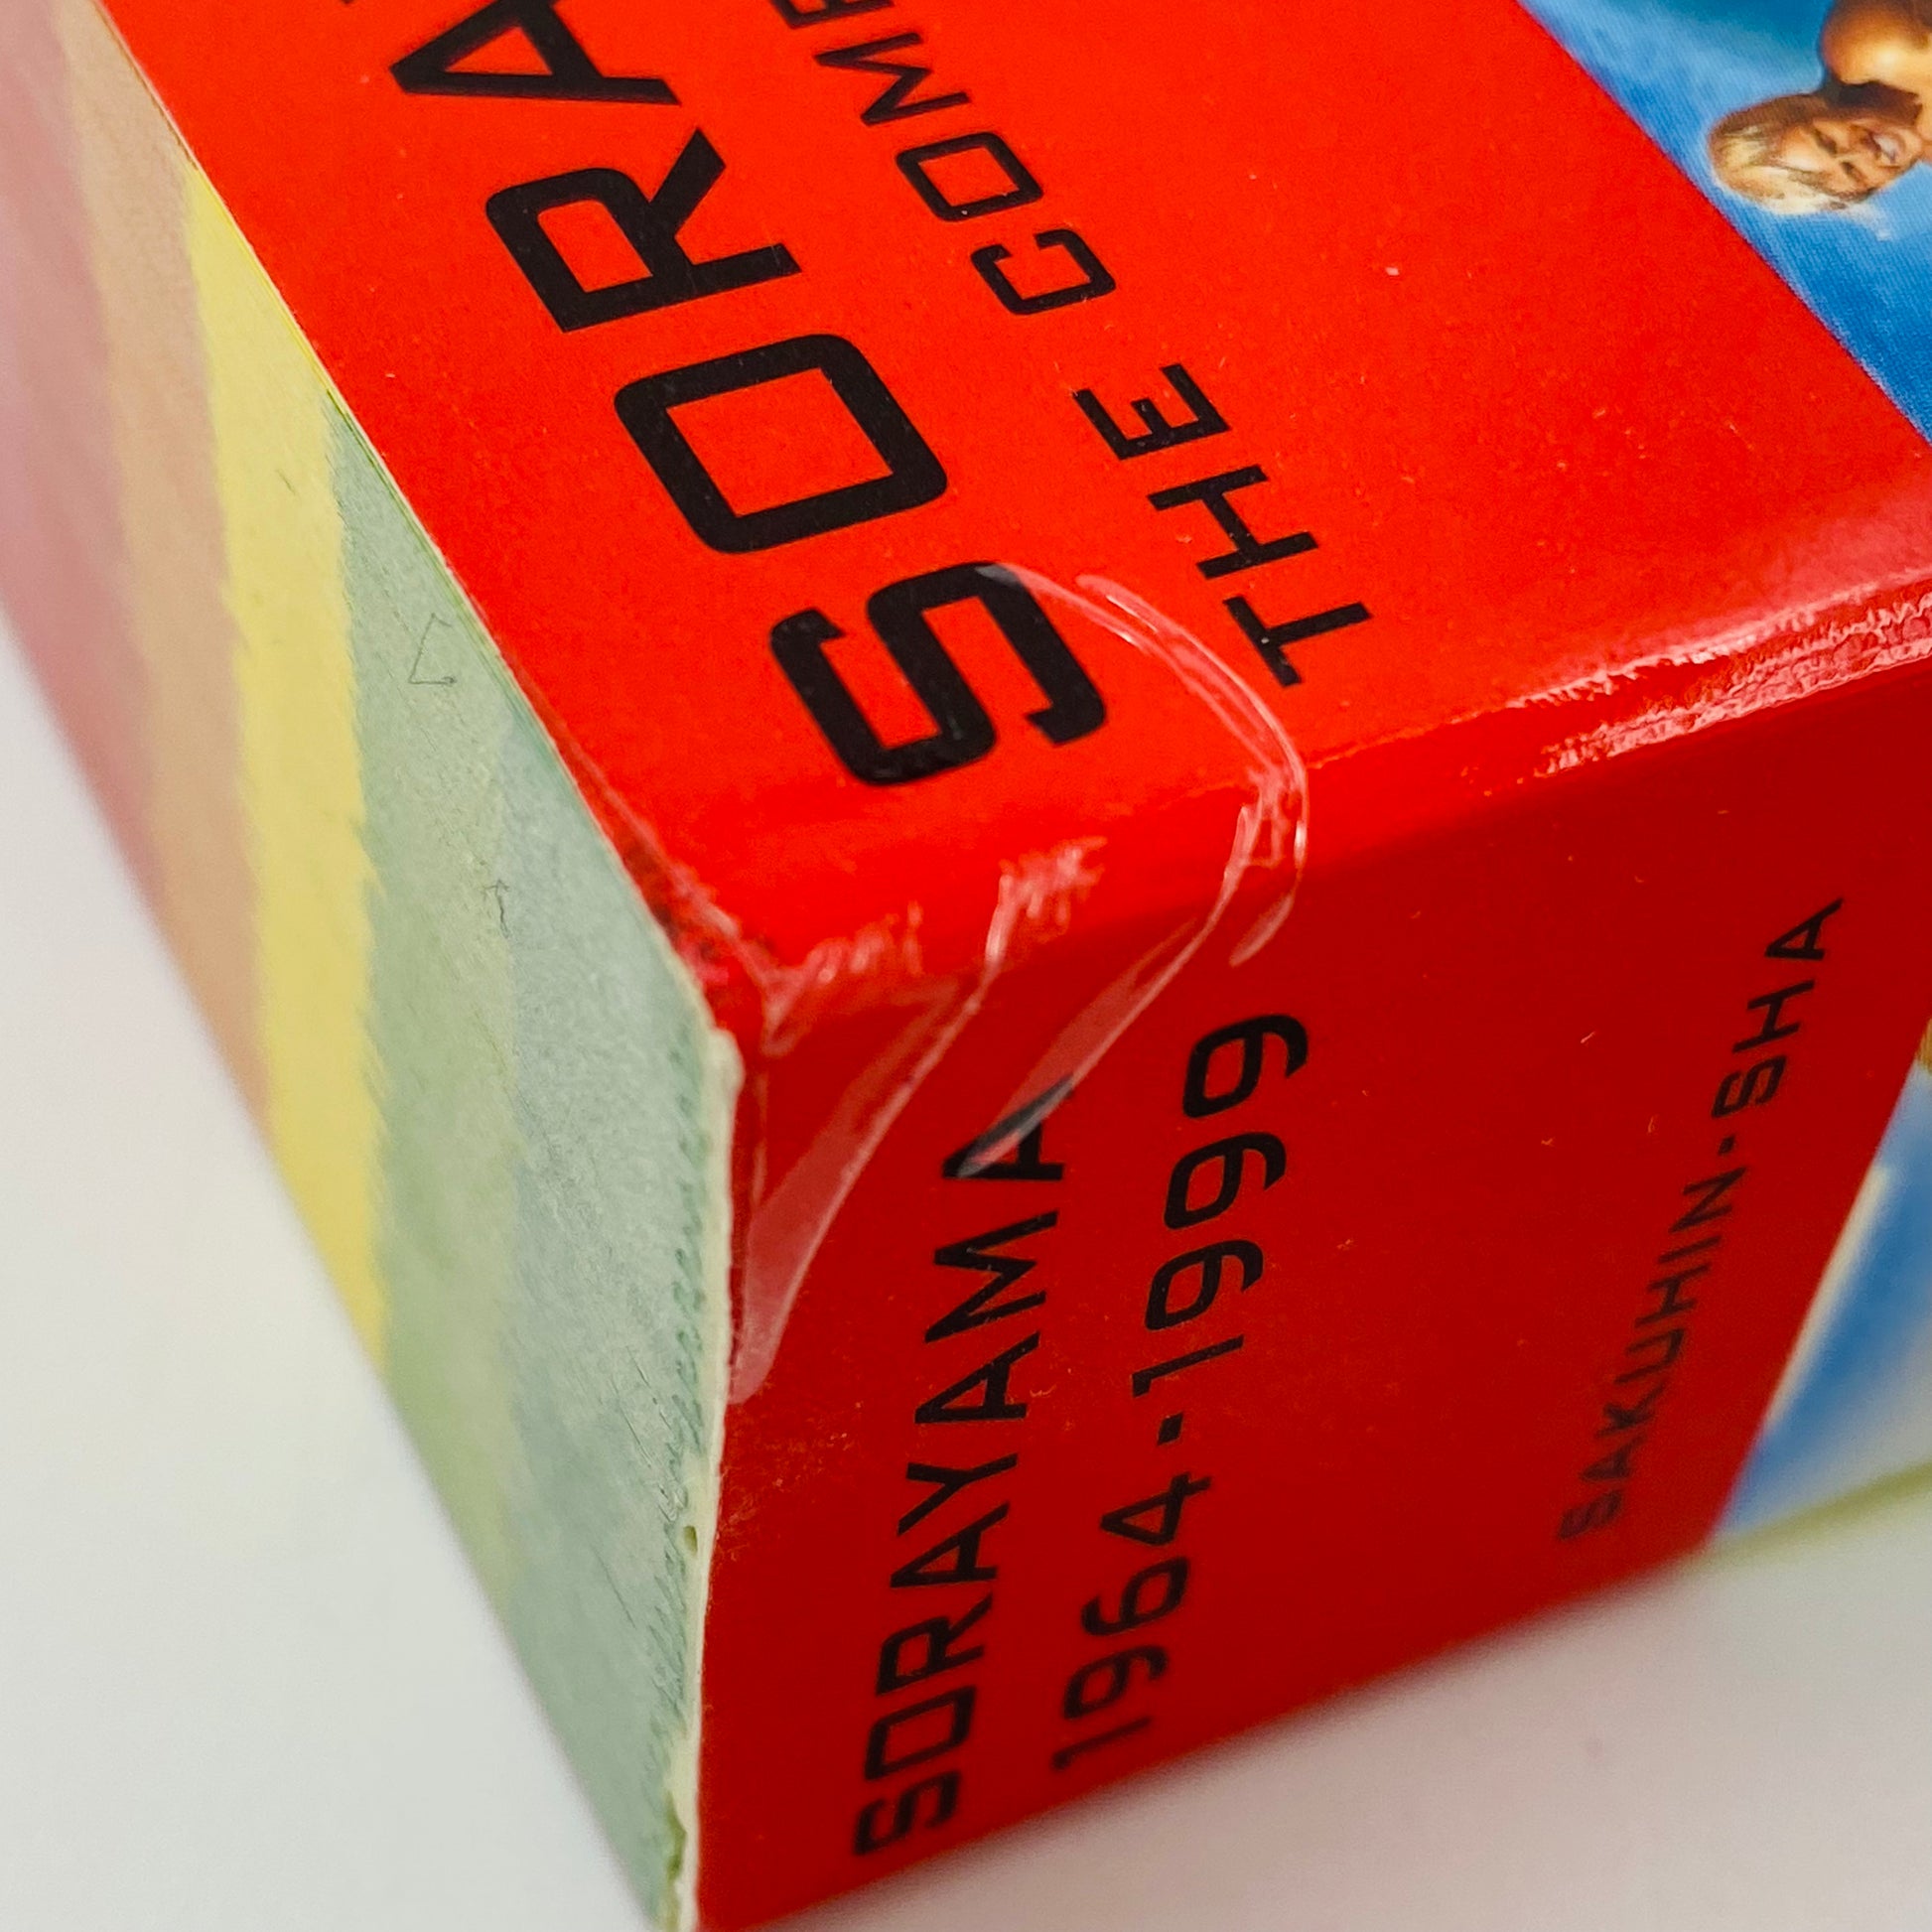 Sorayama 1964-1999: The Complete Works of Hajime Sorayama (2000 